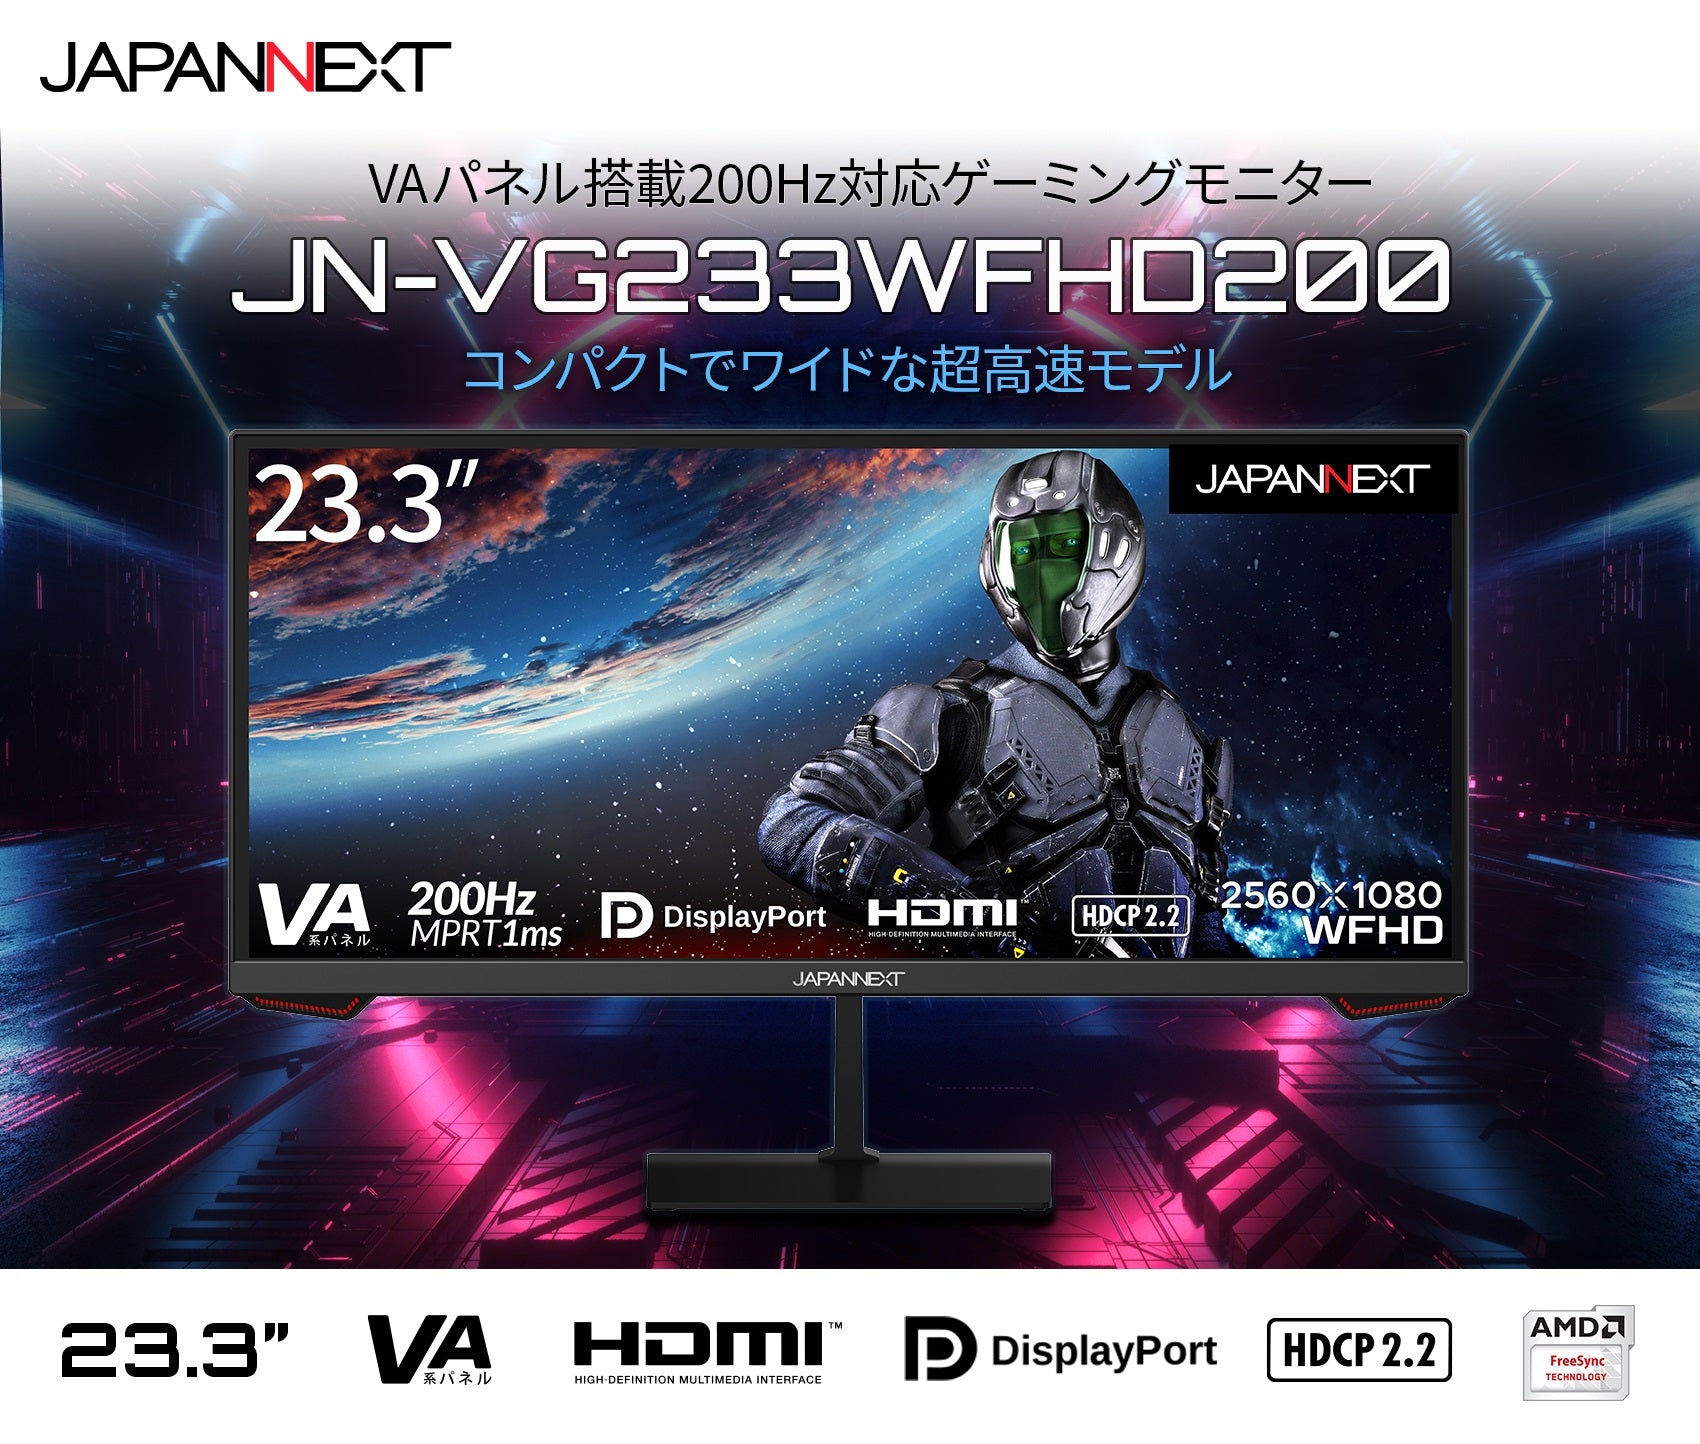 JN-VG233WFHD200